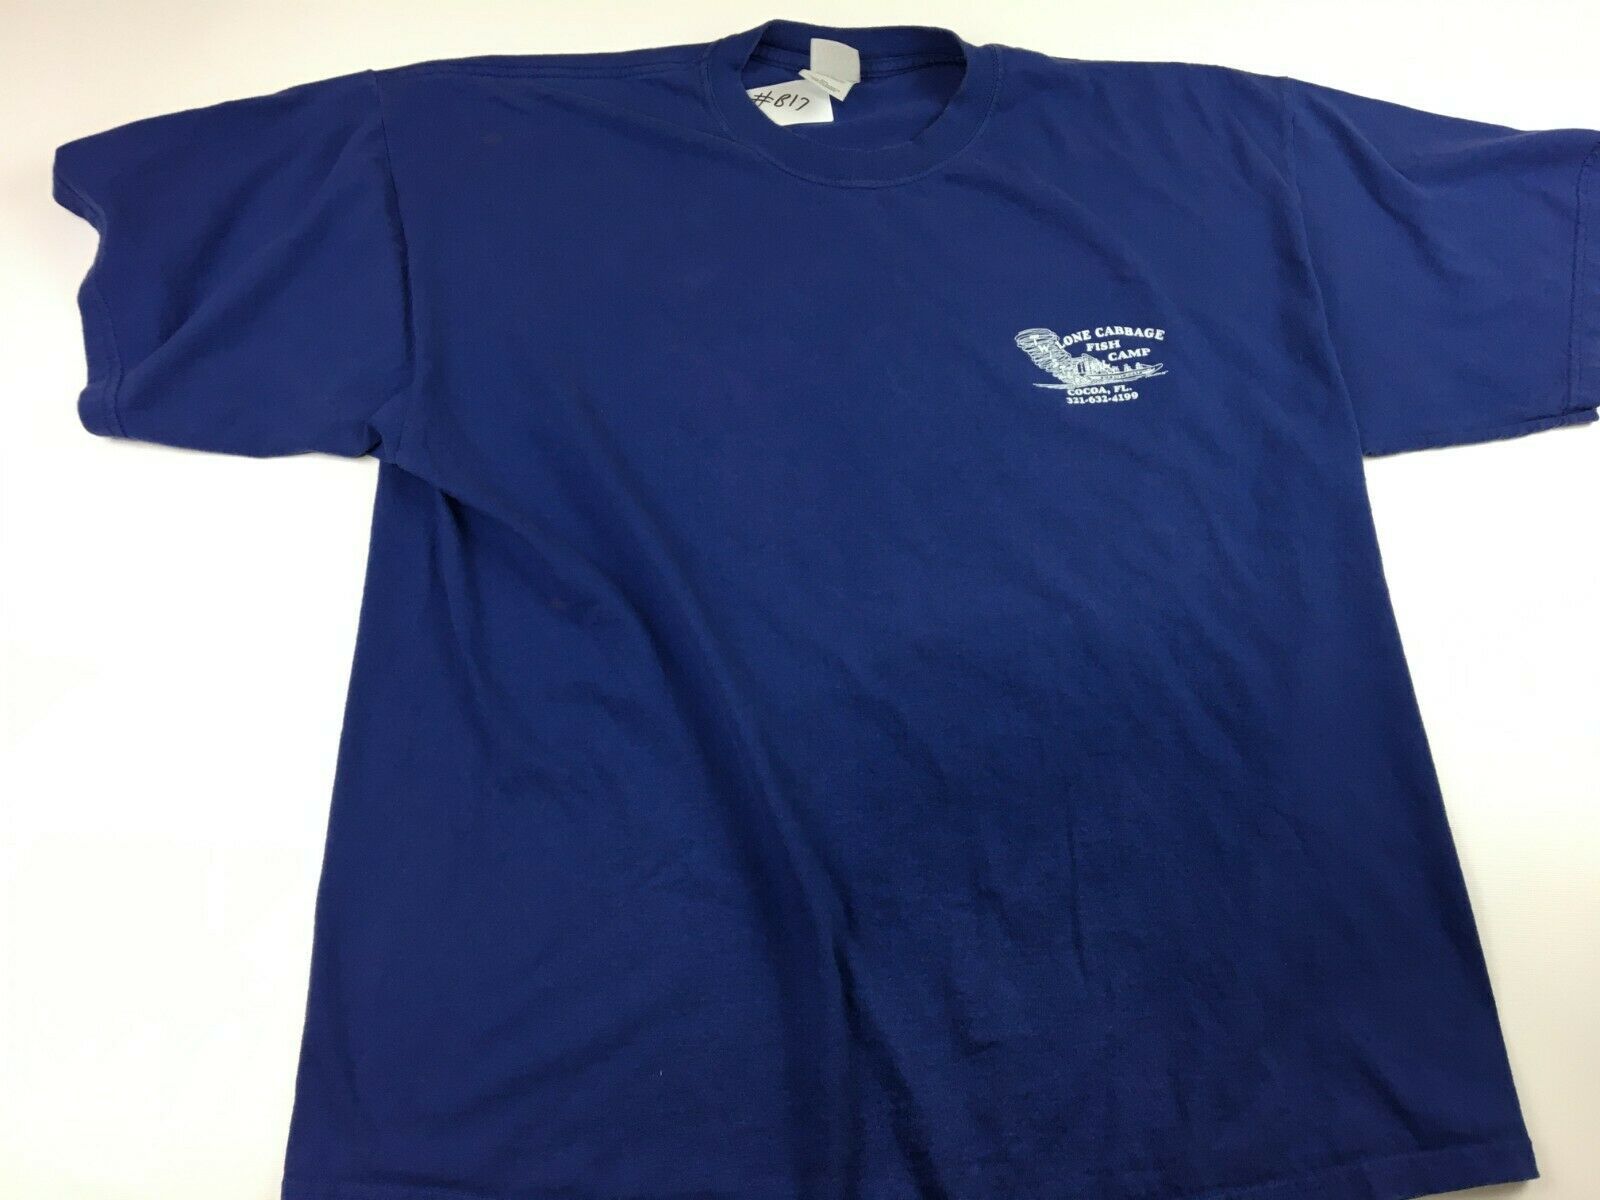 LONE CABBAGE FISH CAMP T-SHIRT GATOR TAIL SIZE 2 XL - T-Shirts